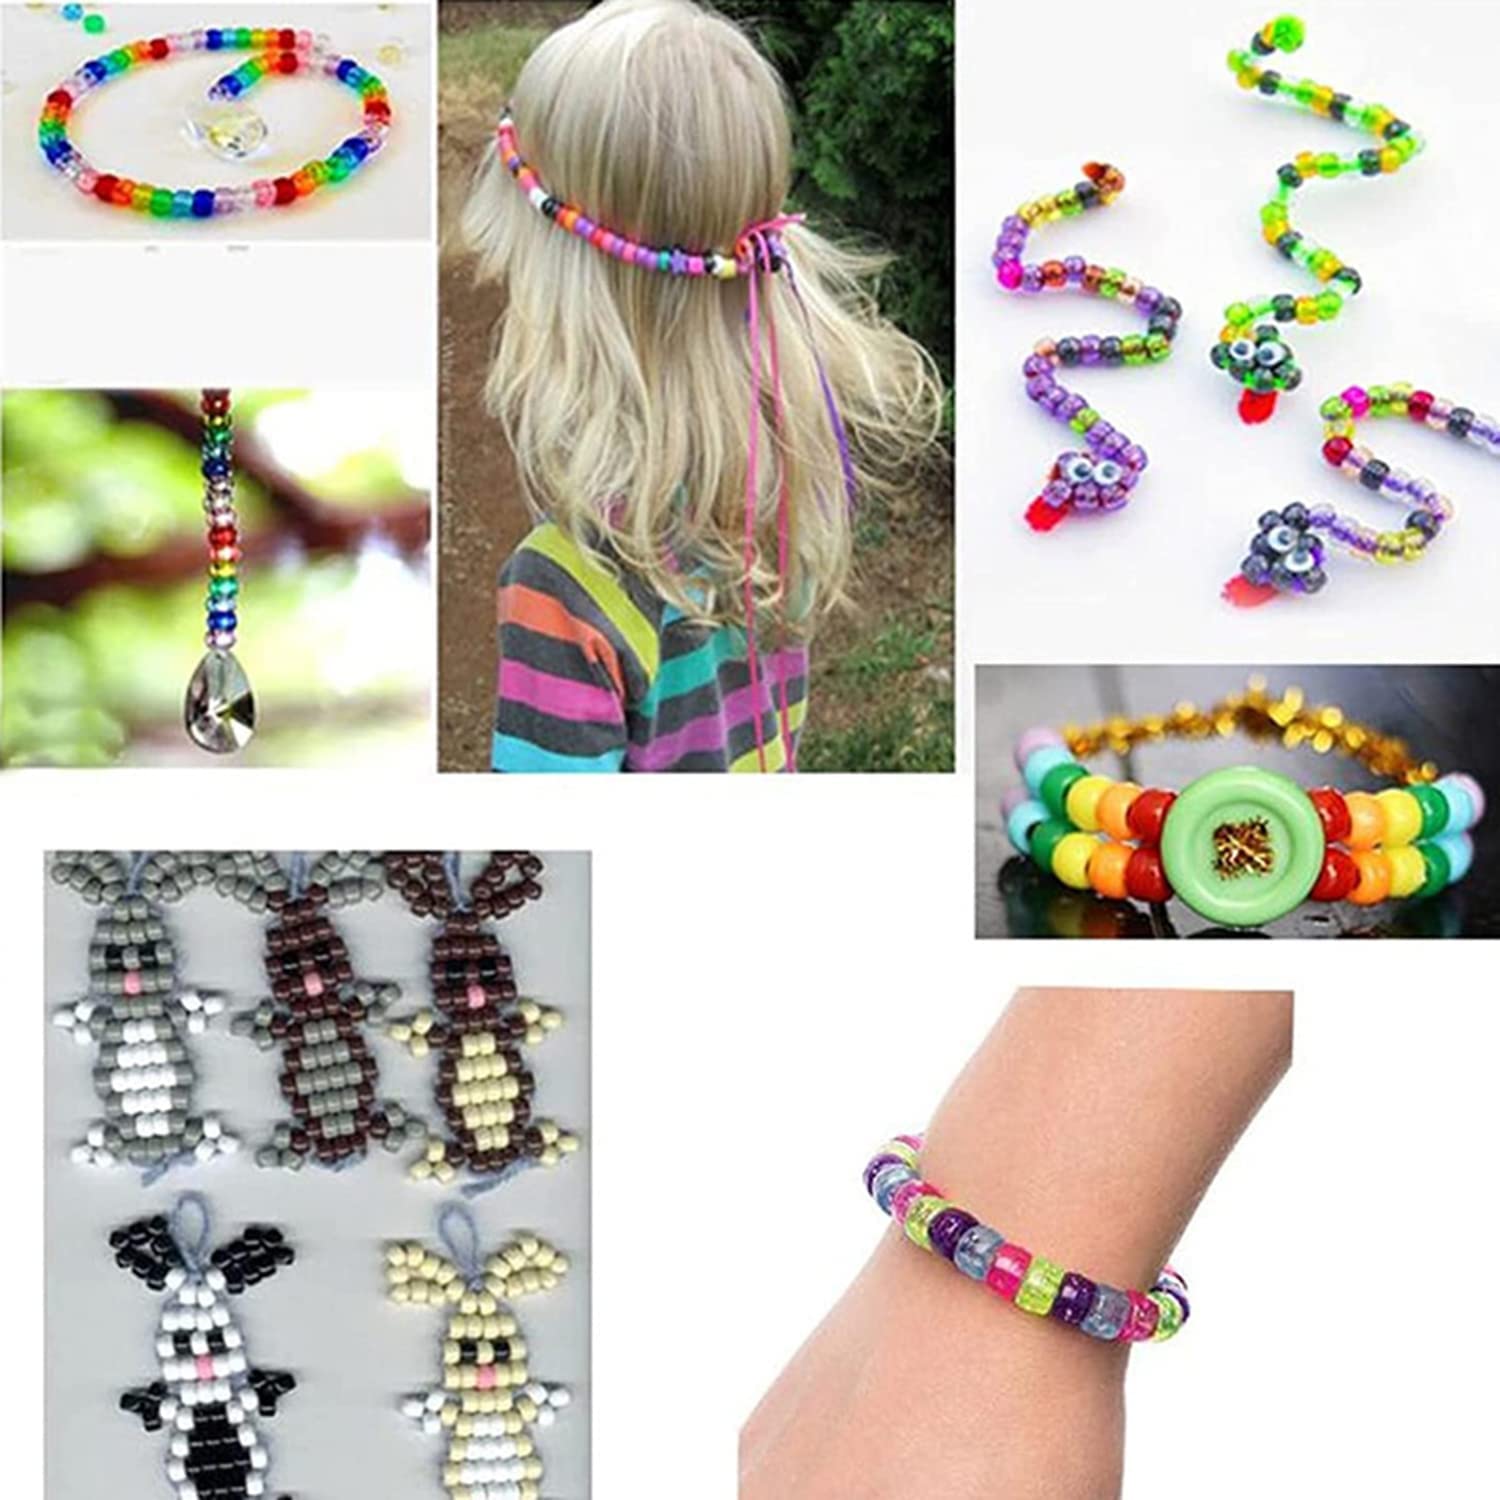 Bracelet Making Kit Girls Friendship Jewelry Pony Kandi Beads Diy